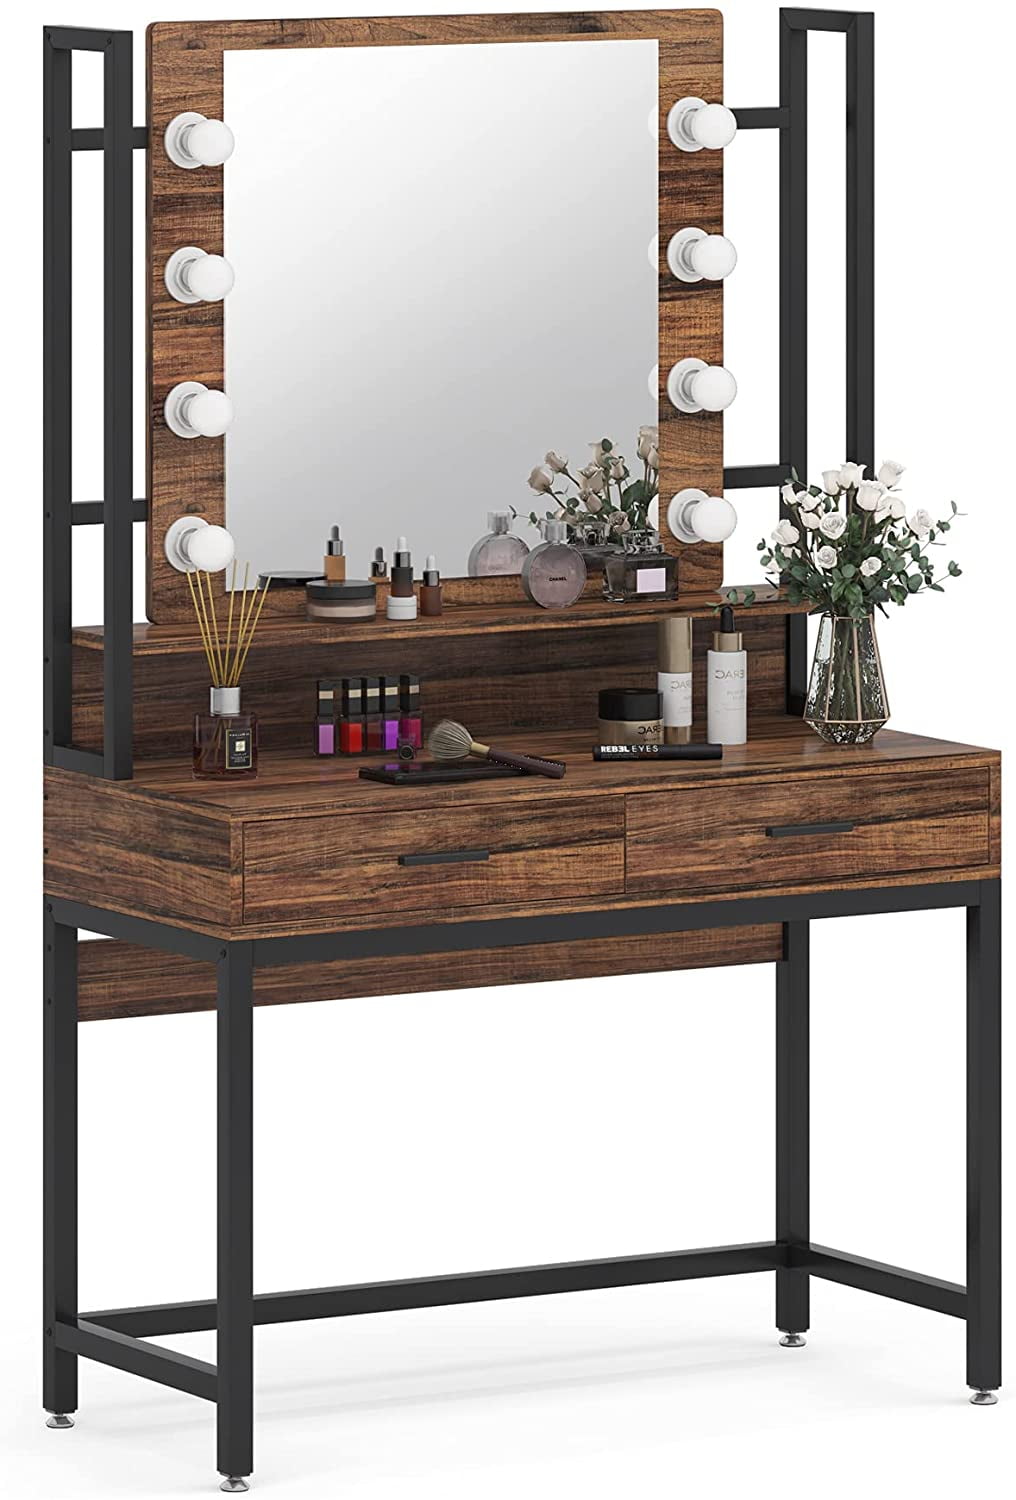 Stretton Urban Bedroom Dressing Vanity Makeup Table Mirror & Drawer Rustic Oak 